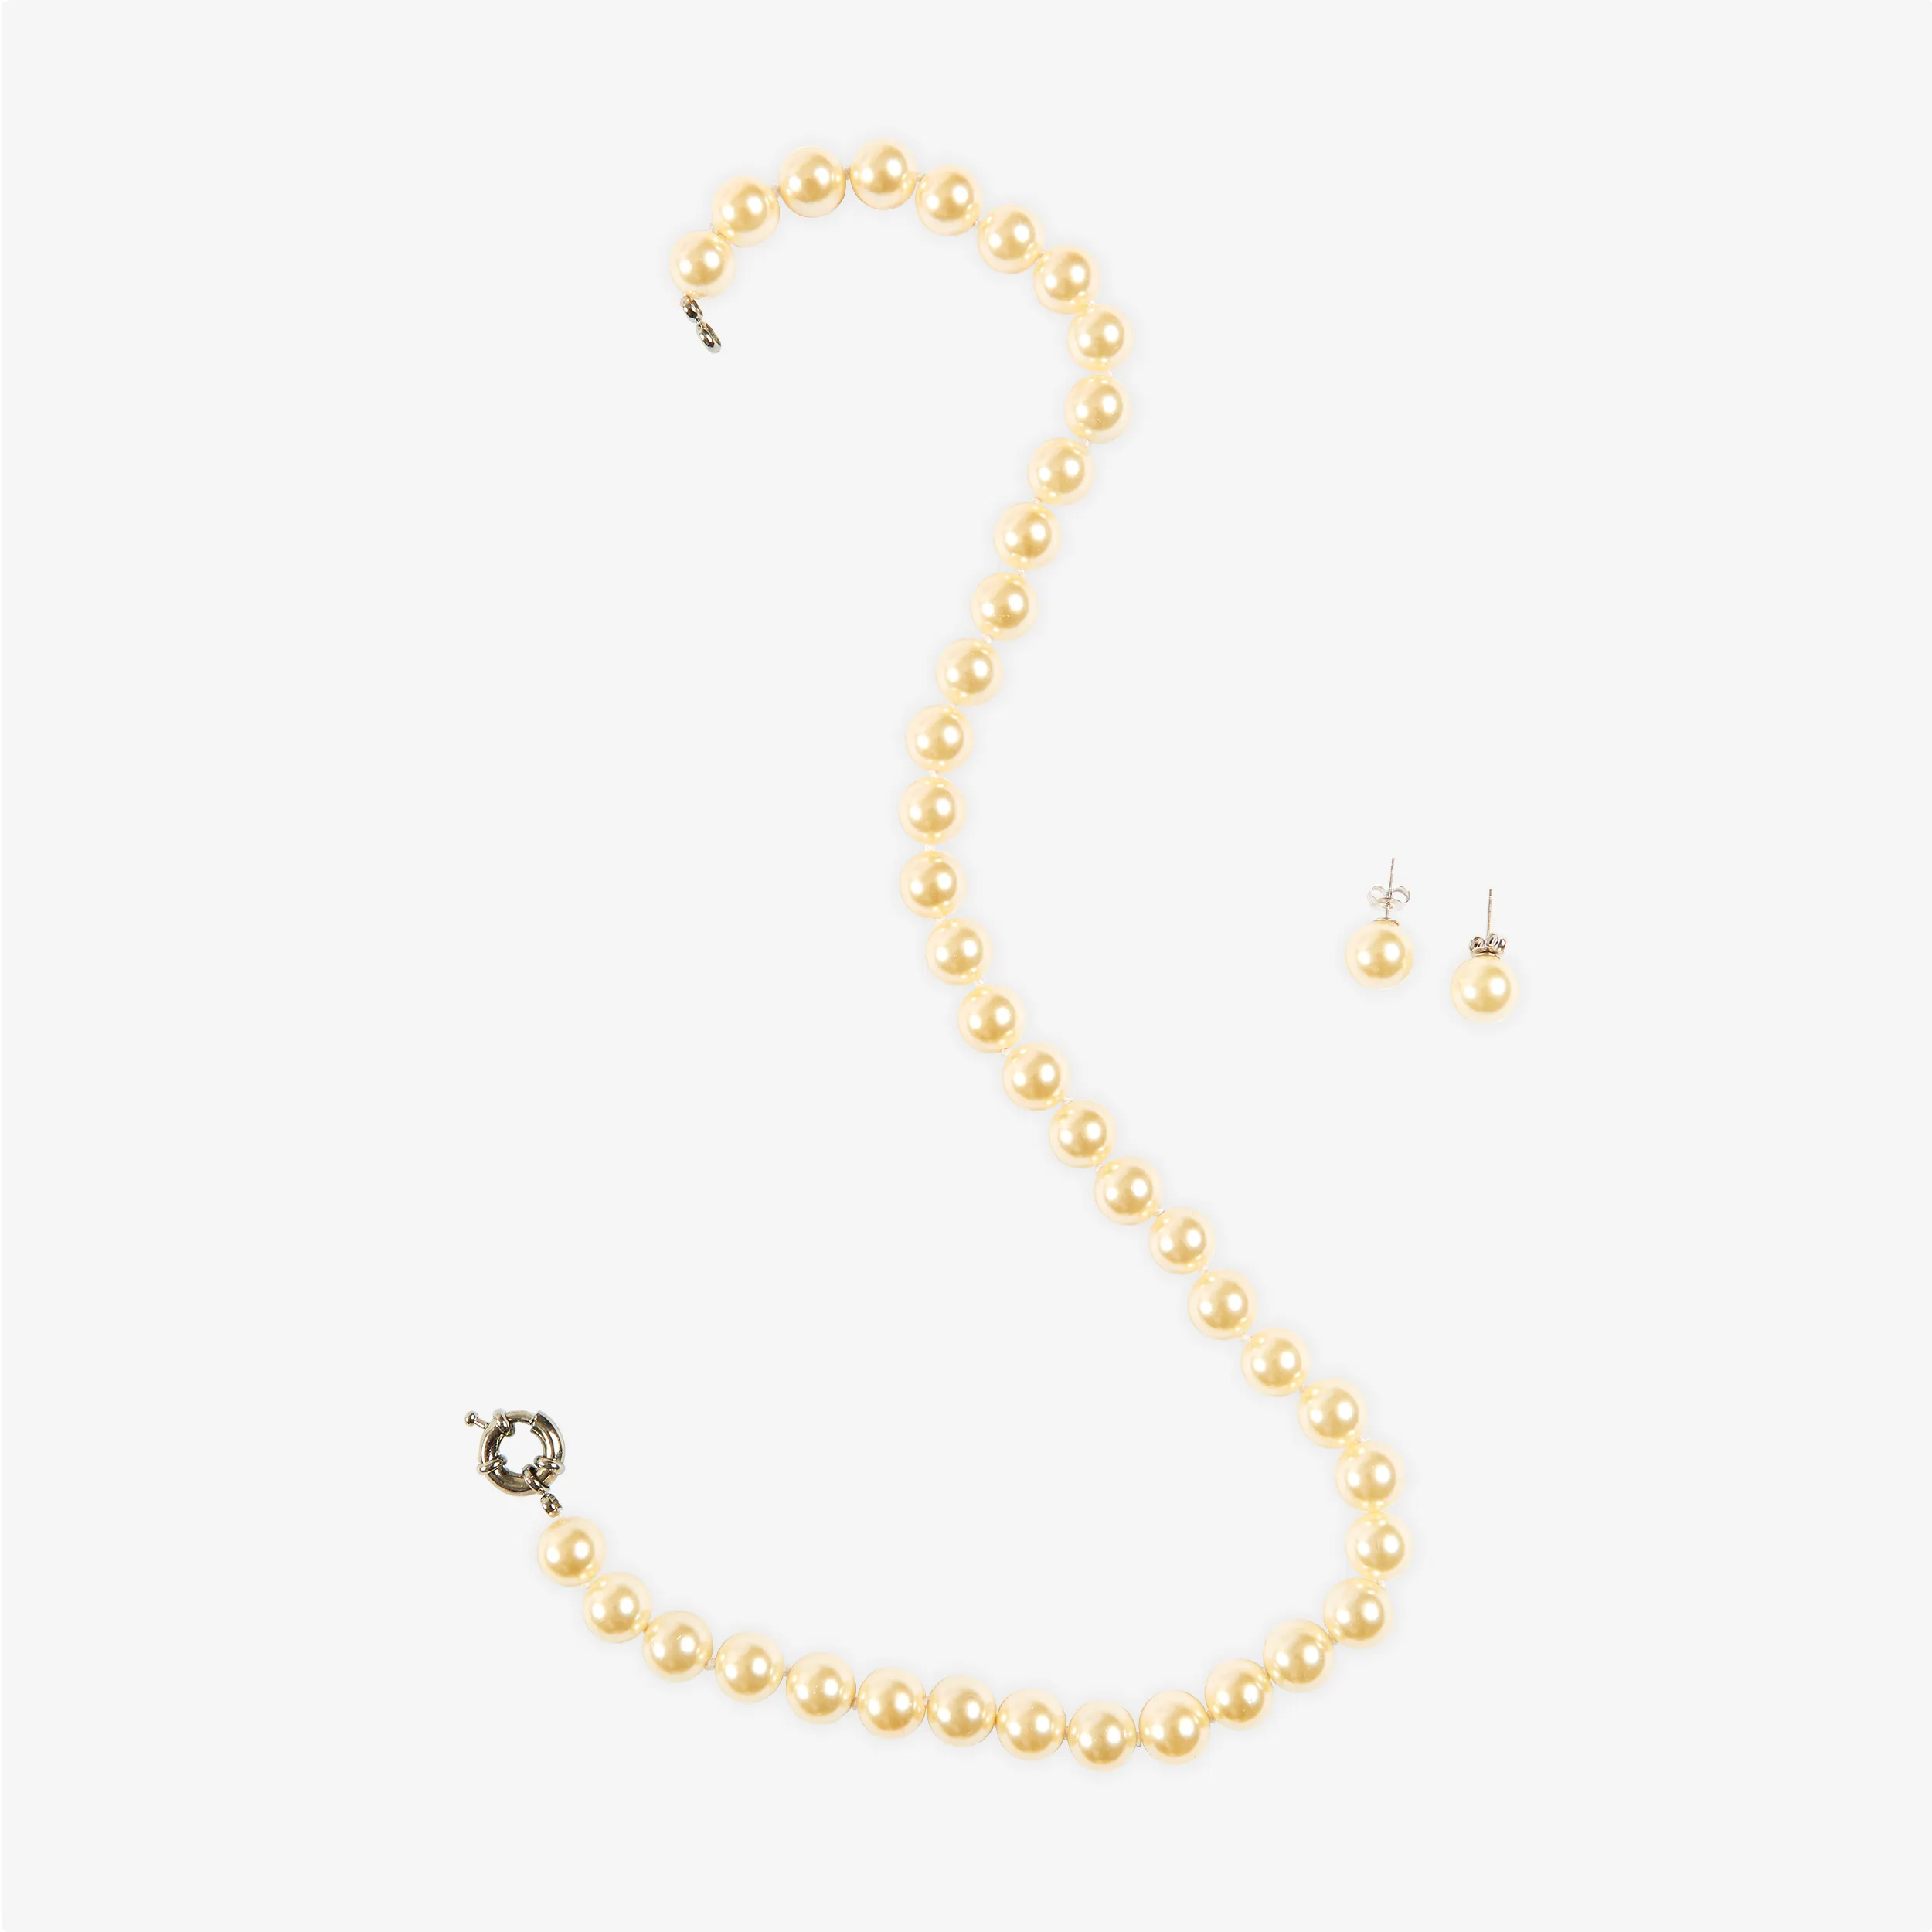 WW Original Design Natural Shell Pearl Fashion Cream Yellow Round Bead Necklace